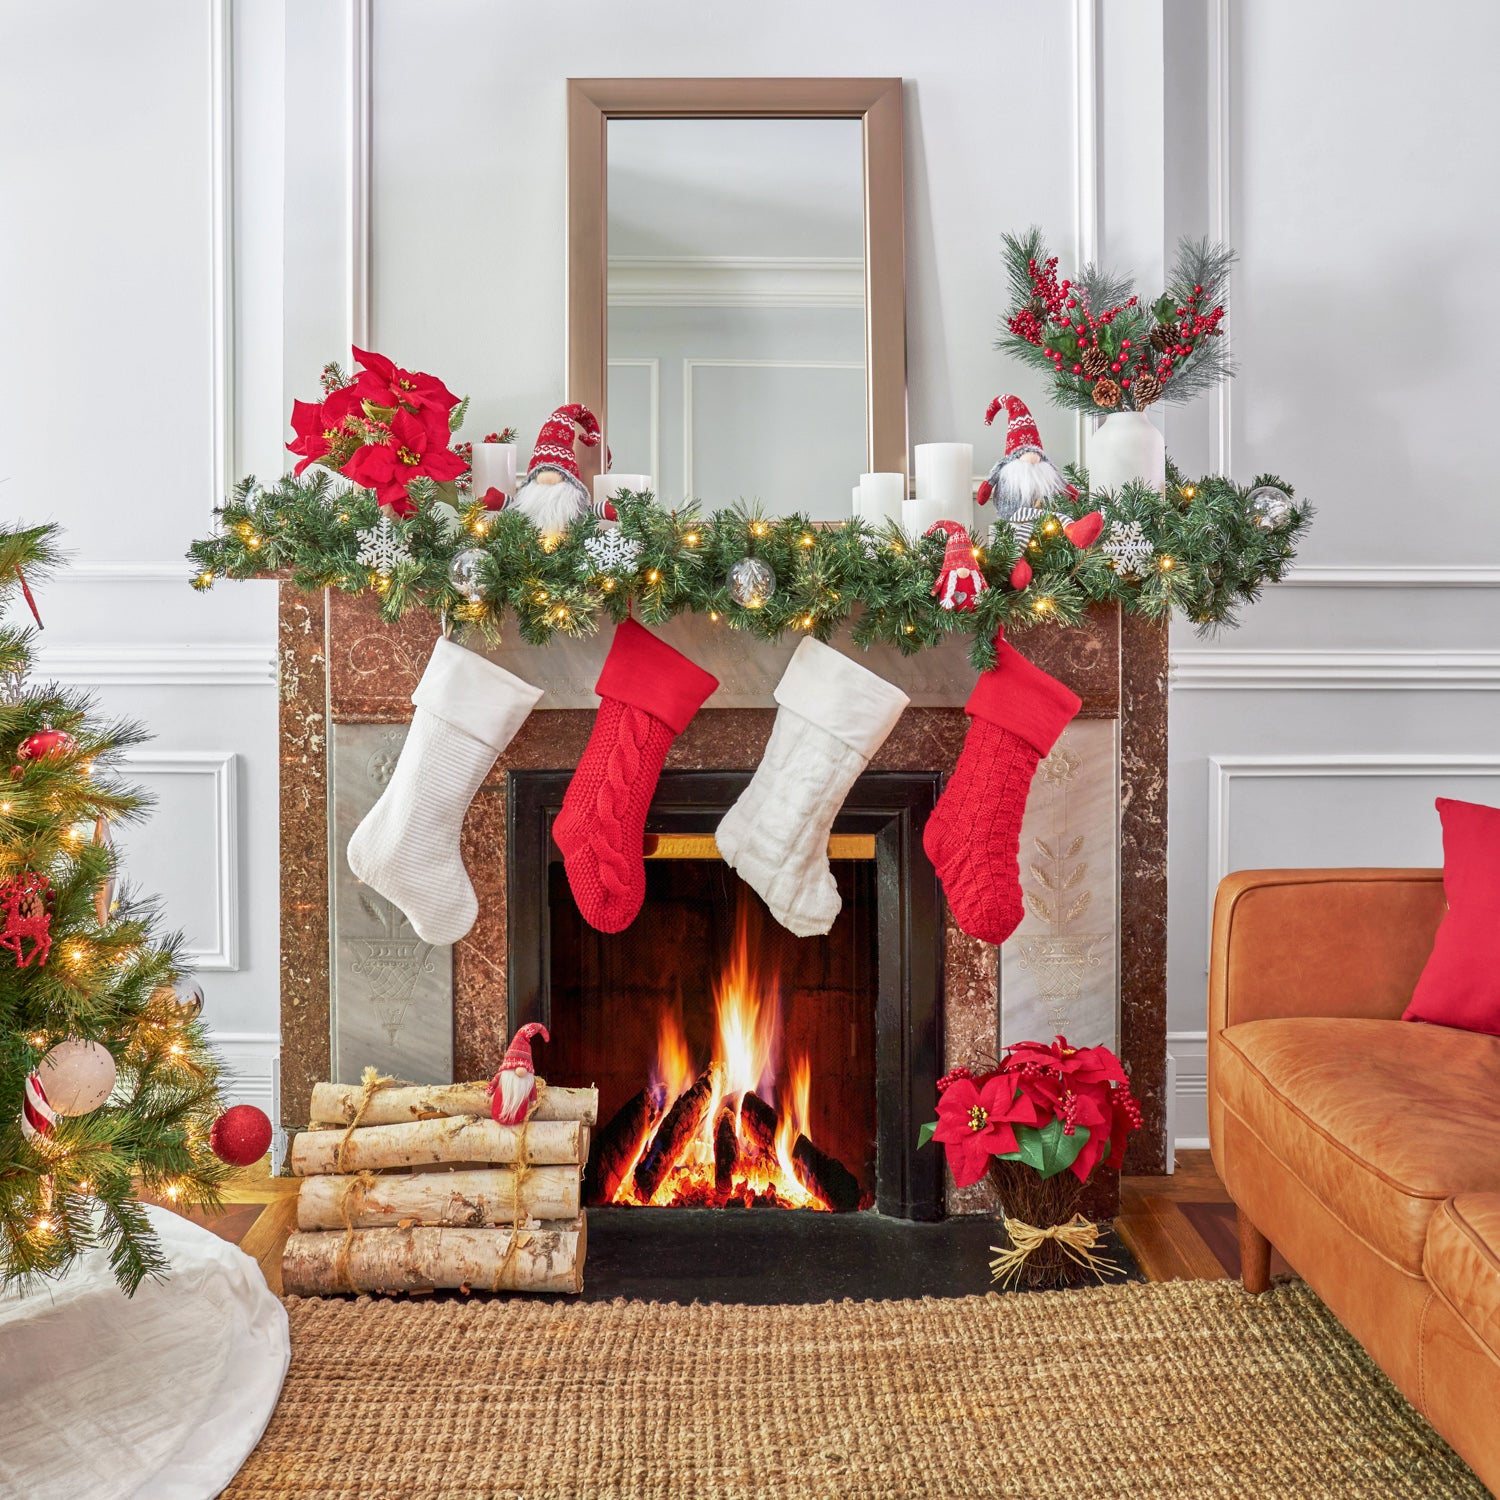 Neutral White Stripe Stitch Christmas Stocking with Velvet Cuff